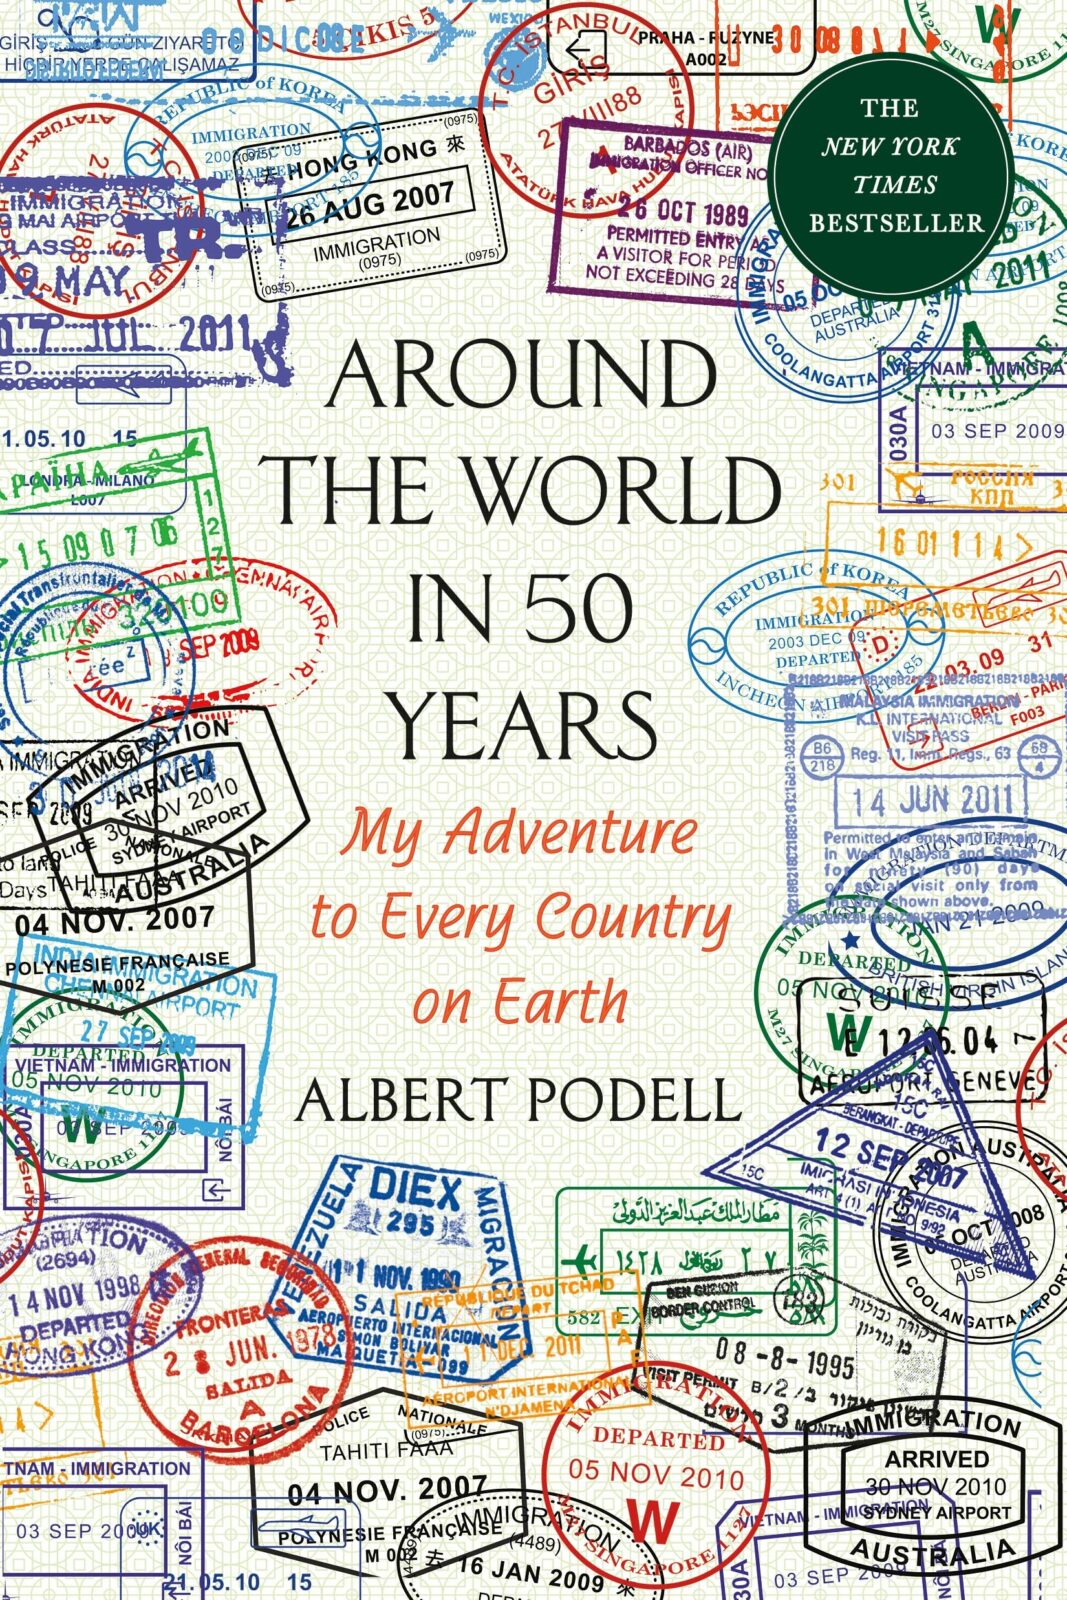 Around the World in 50 Year, a travel memoir